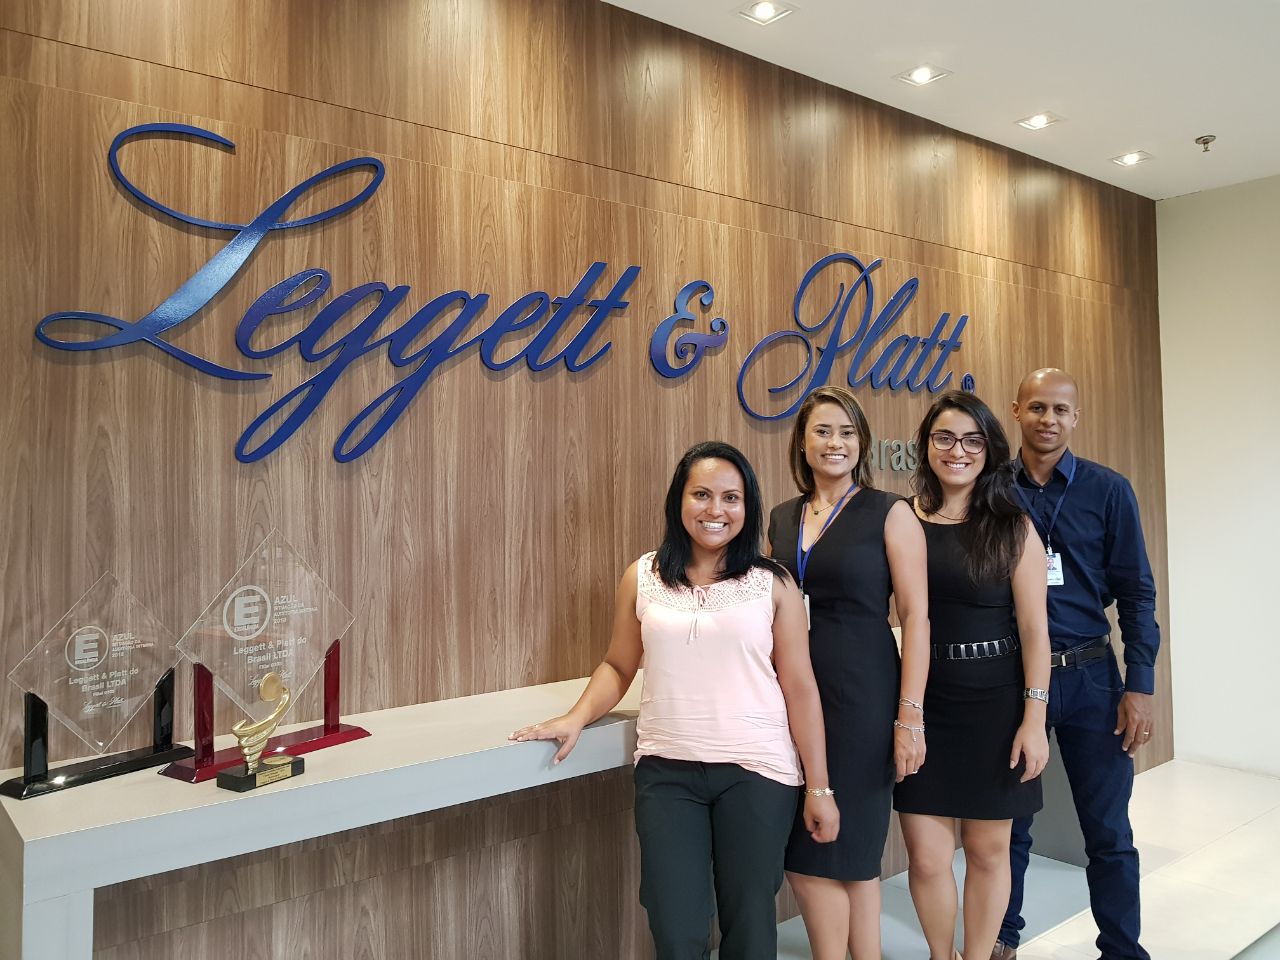 L&P Brazil’s Customer Service team from left to right: Gilvania Maria, Marília Prado, Fernanda Christina, and Edson Malta. 